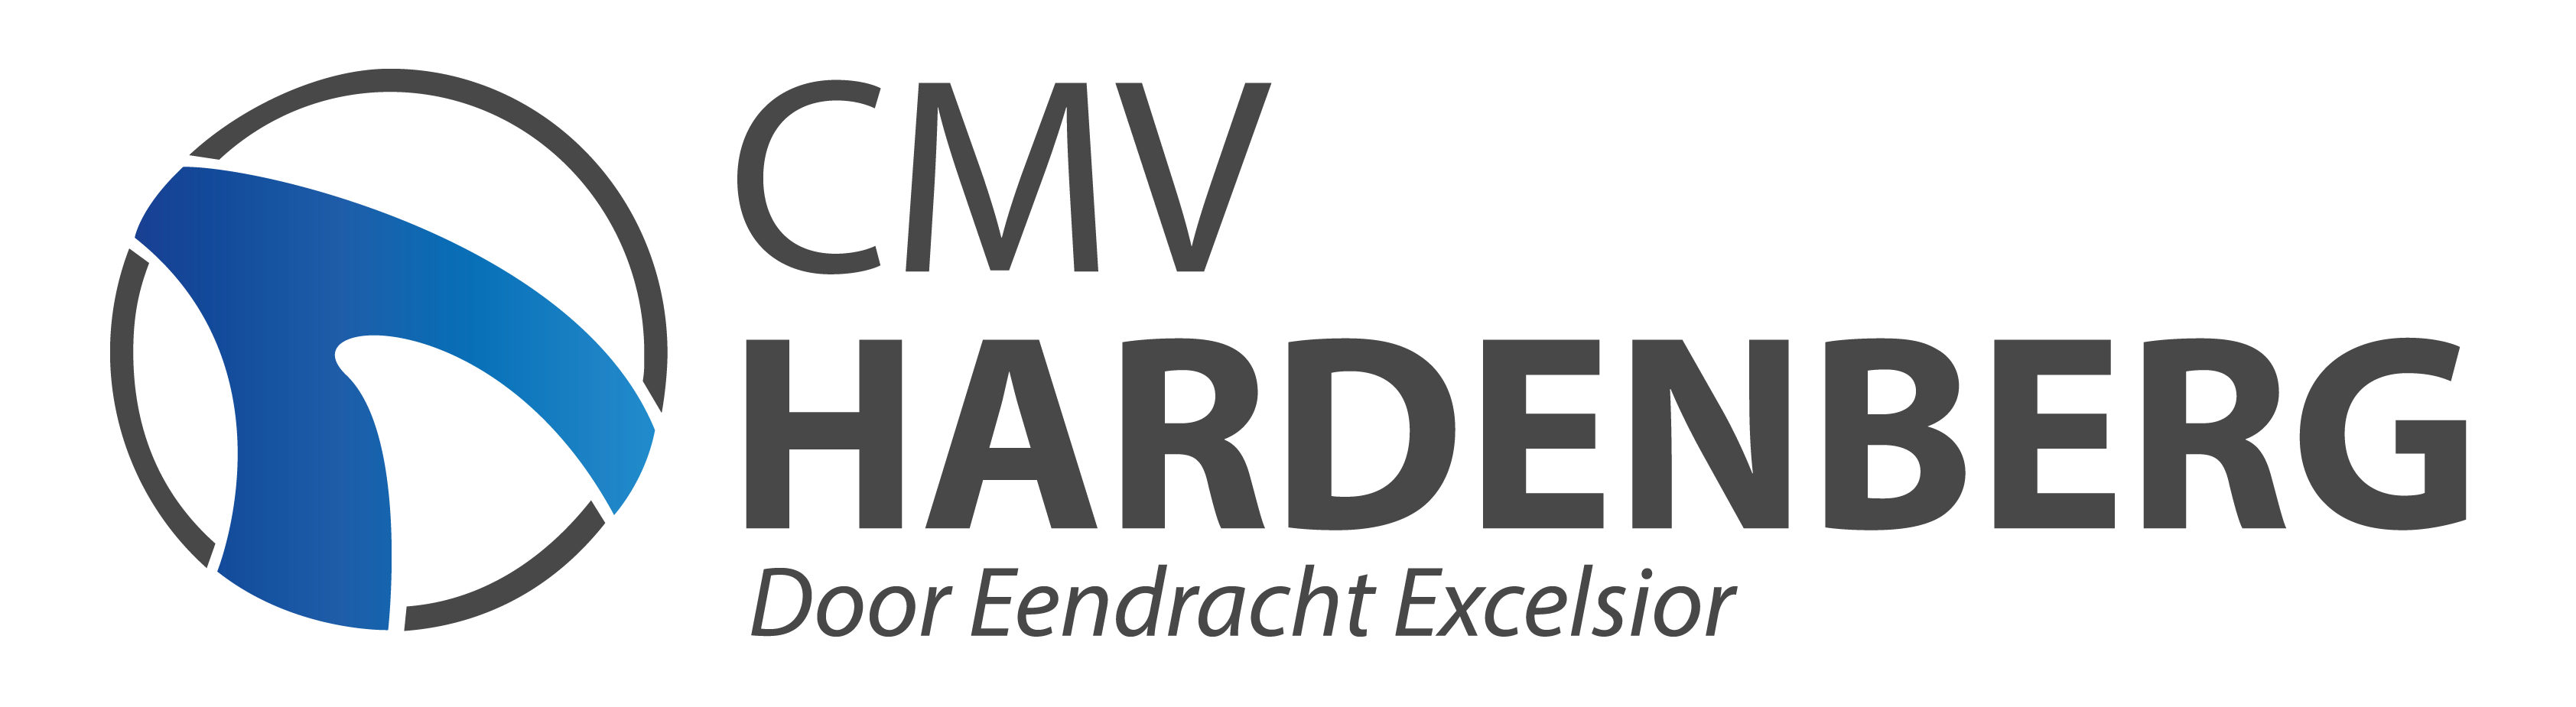 CMV Hardenberg